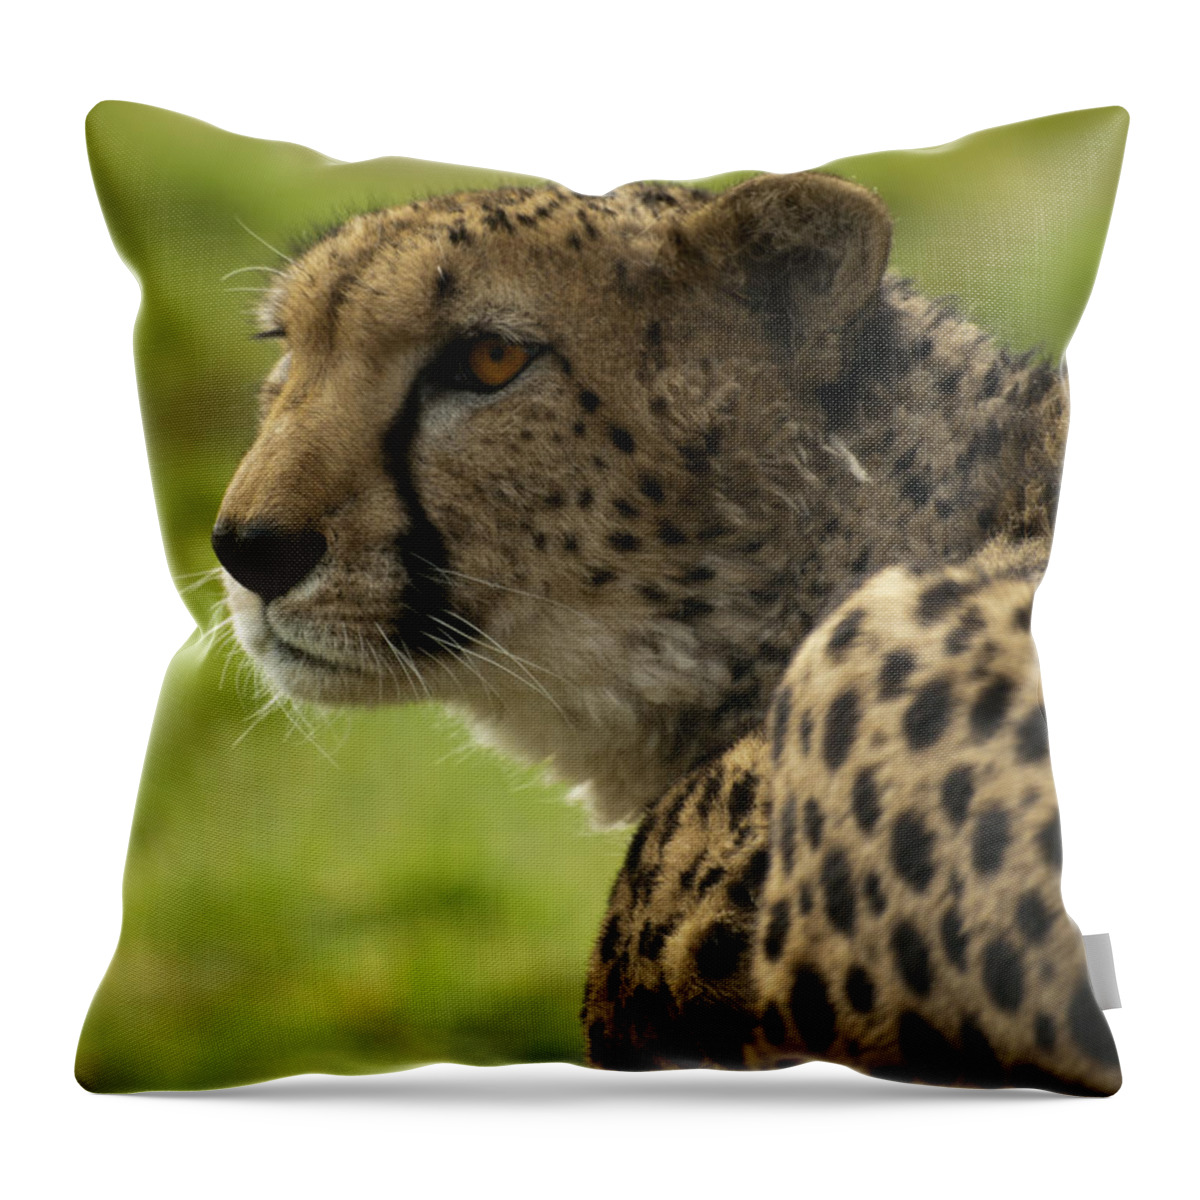 Cheetah Throw Pillow featuring the photograph Cheetah by Steev Stamford